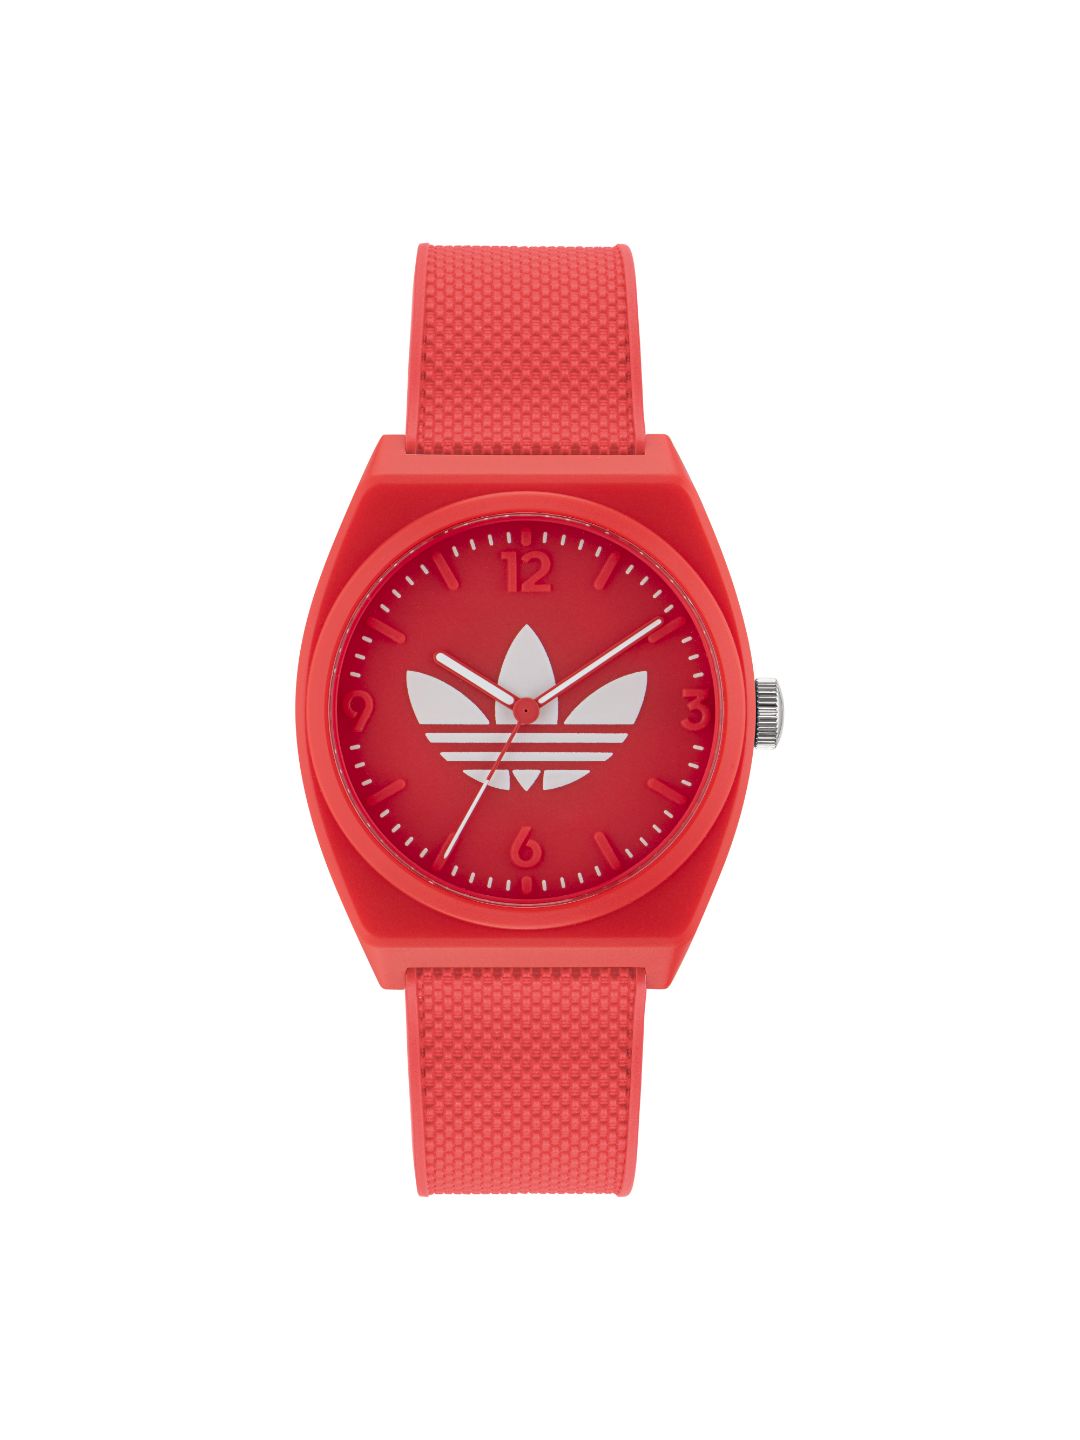 Adidas Originals Red Dial Unisex Watch - AOST23051